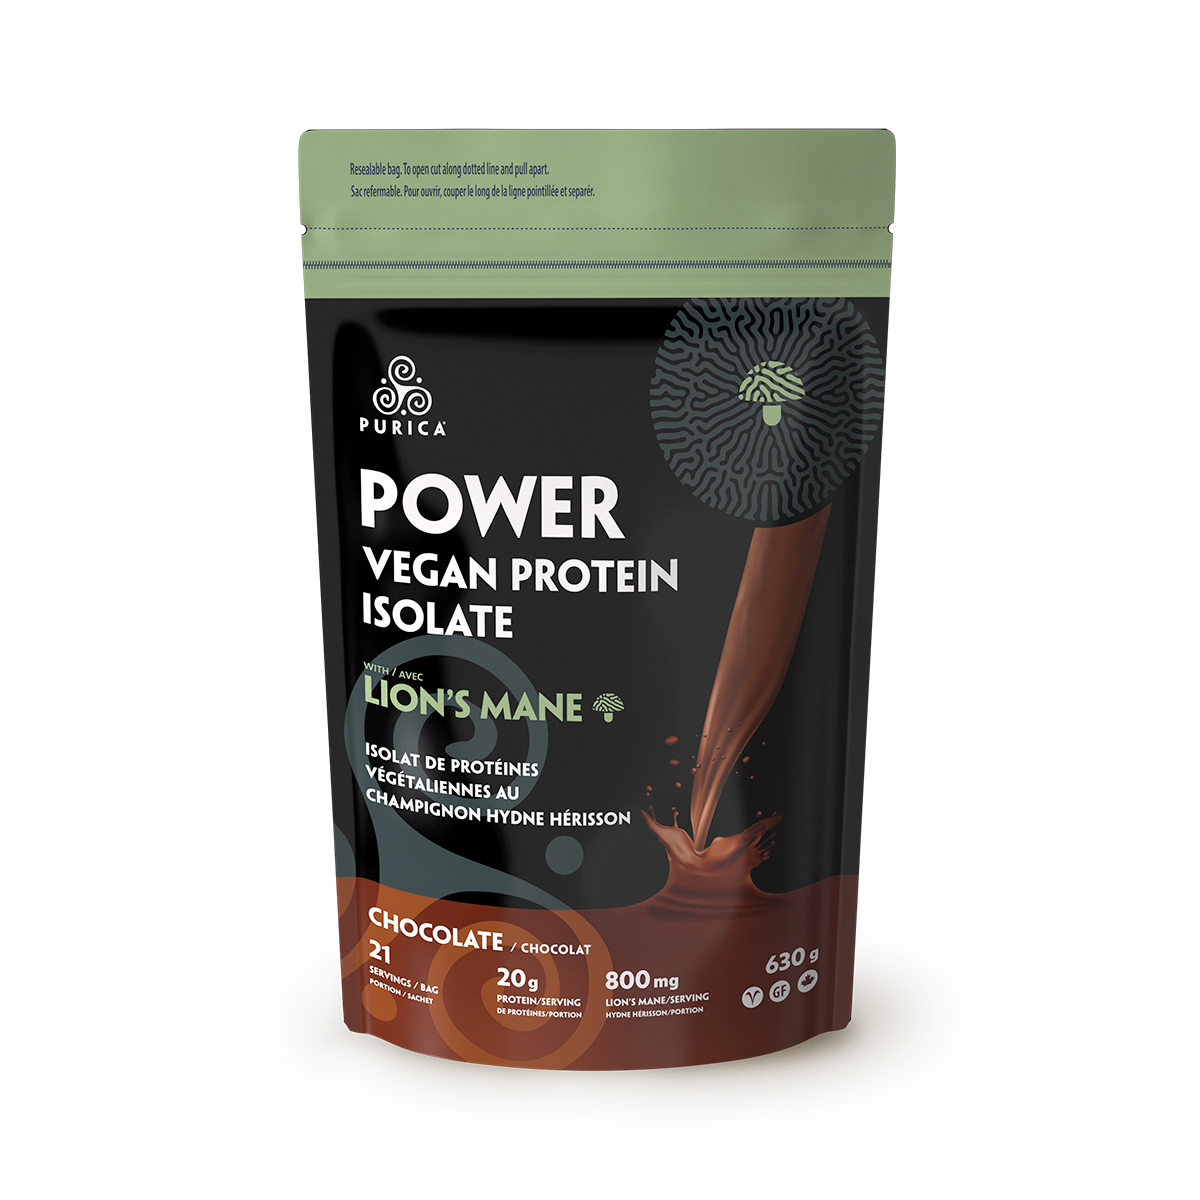 Vegan Protein with Lion's Mane